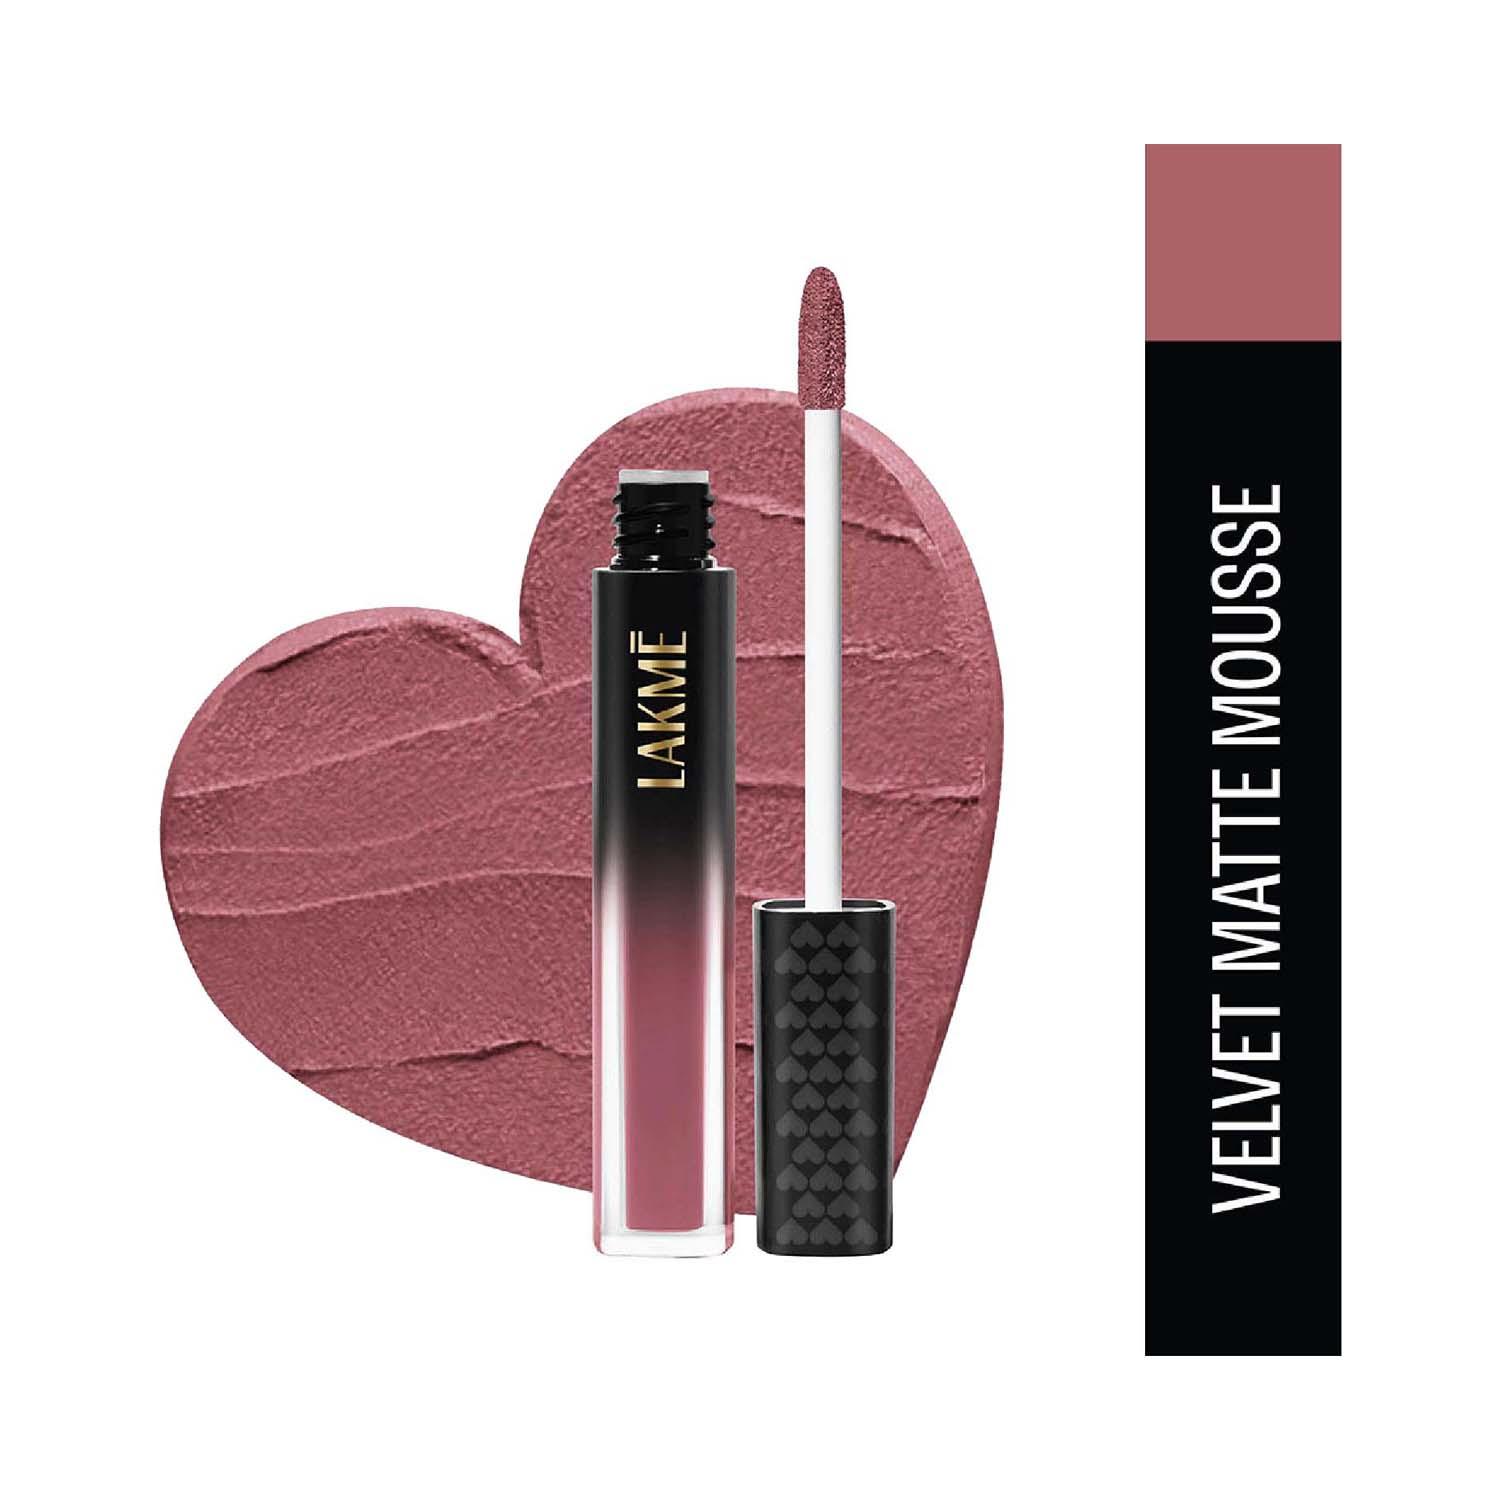 Lakme | Lakme Extraordin-Airy Lip Mousse Liquid Lipstick - Date Night Pink (4.6g)